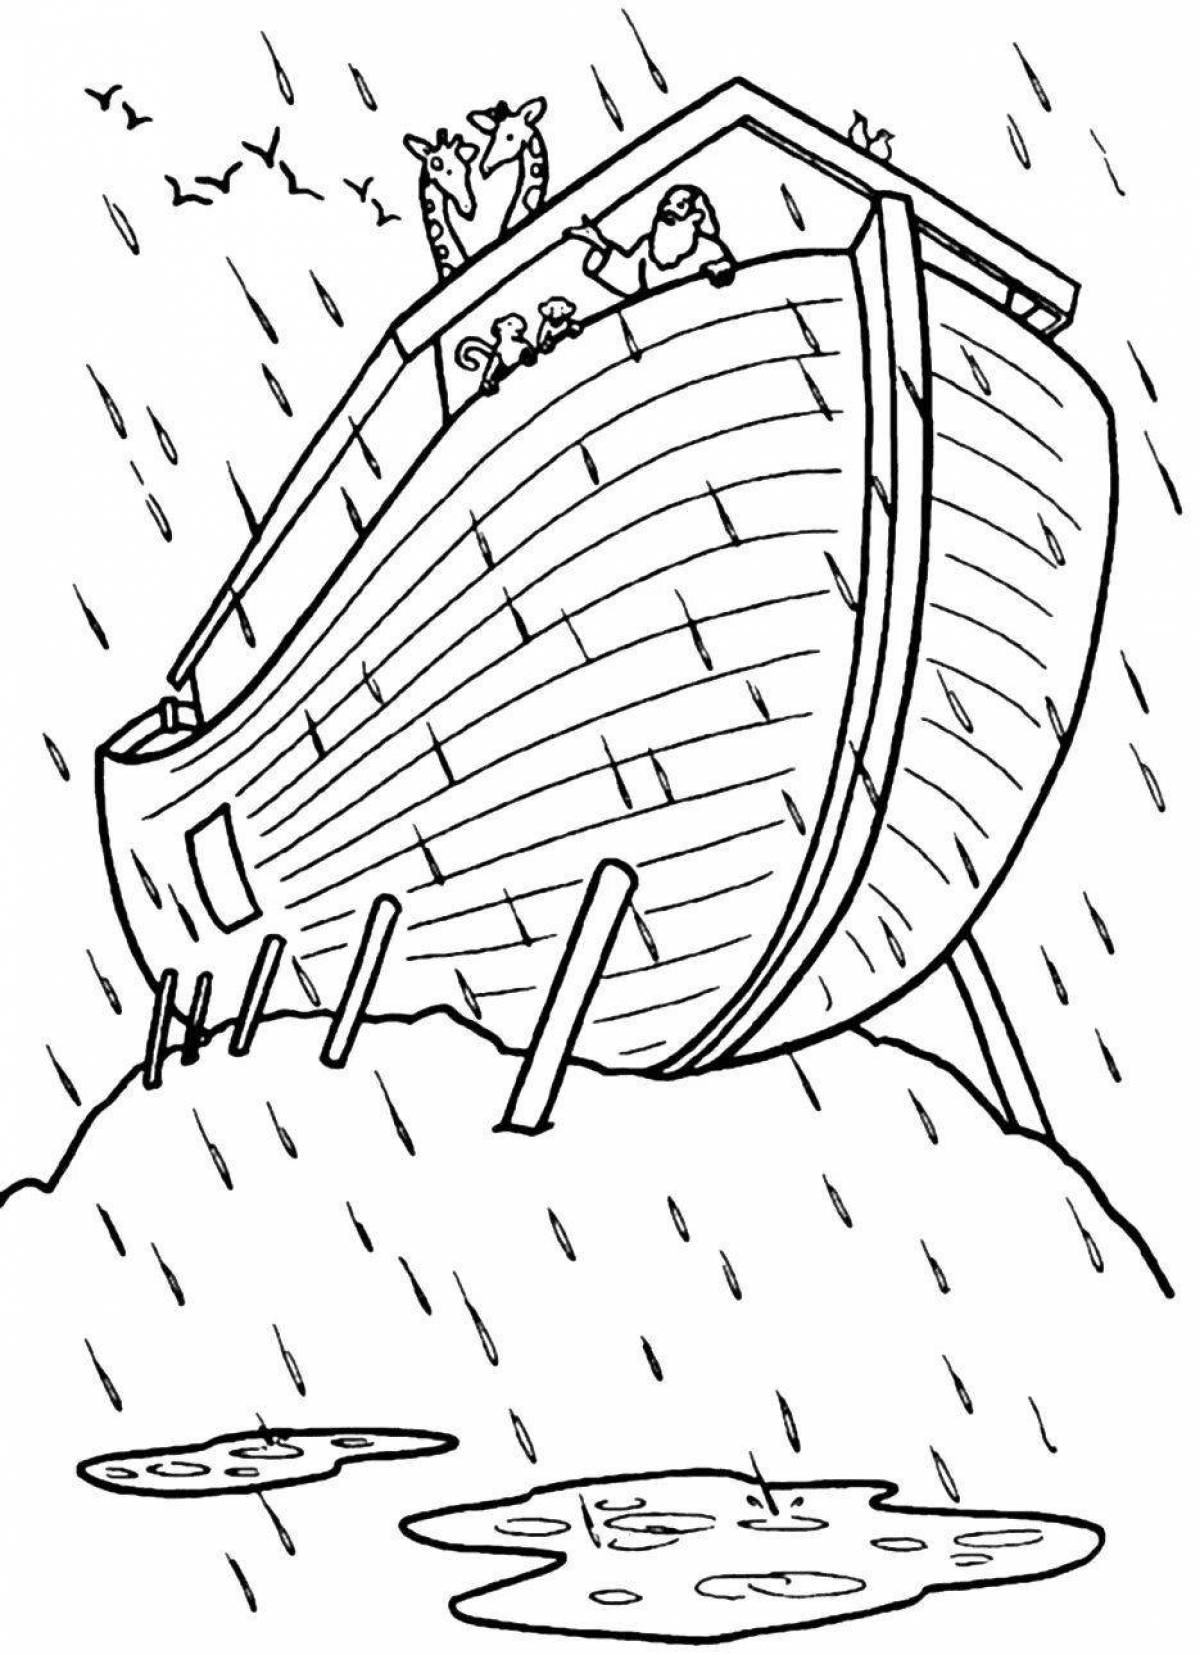 Inspirational Noah's Ark coloring book for kids